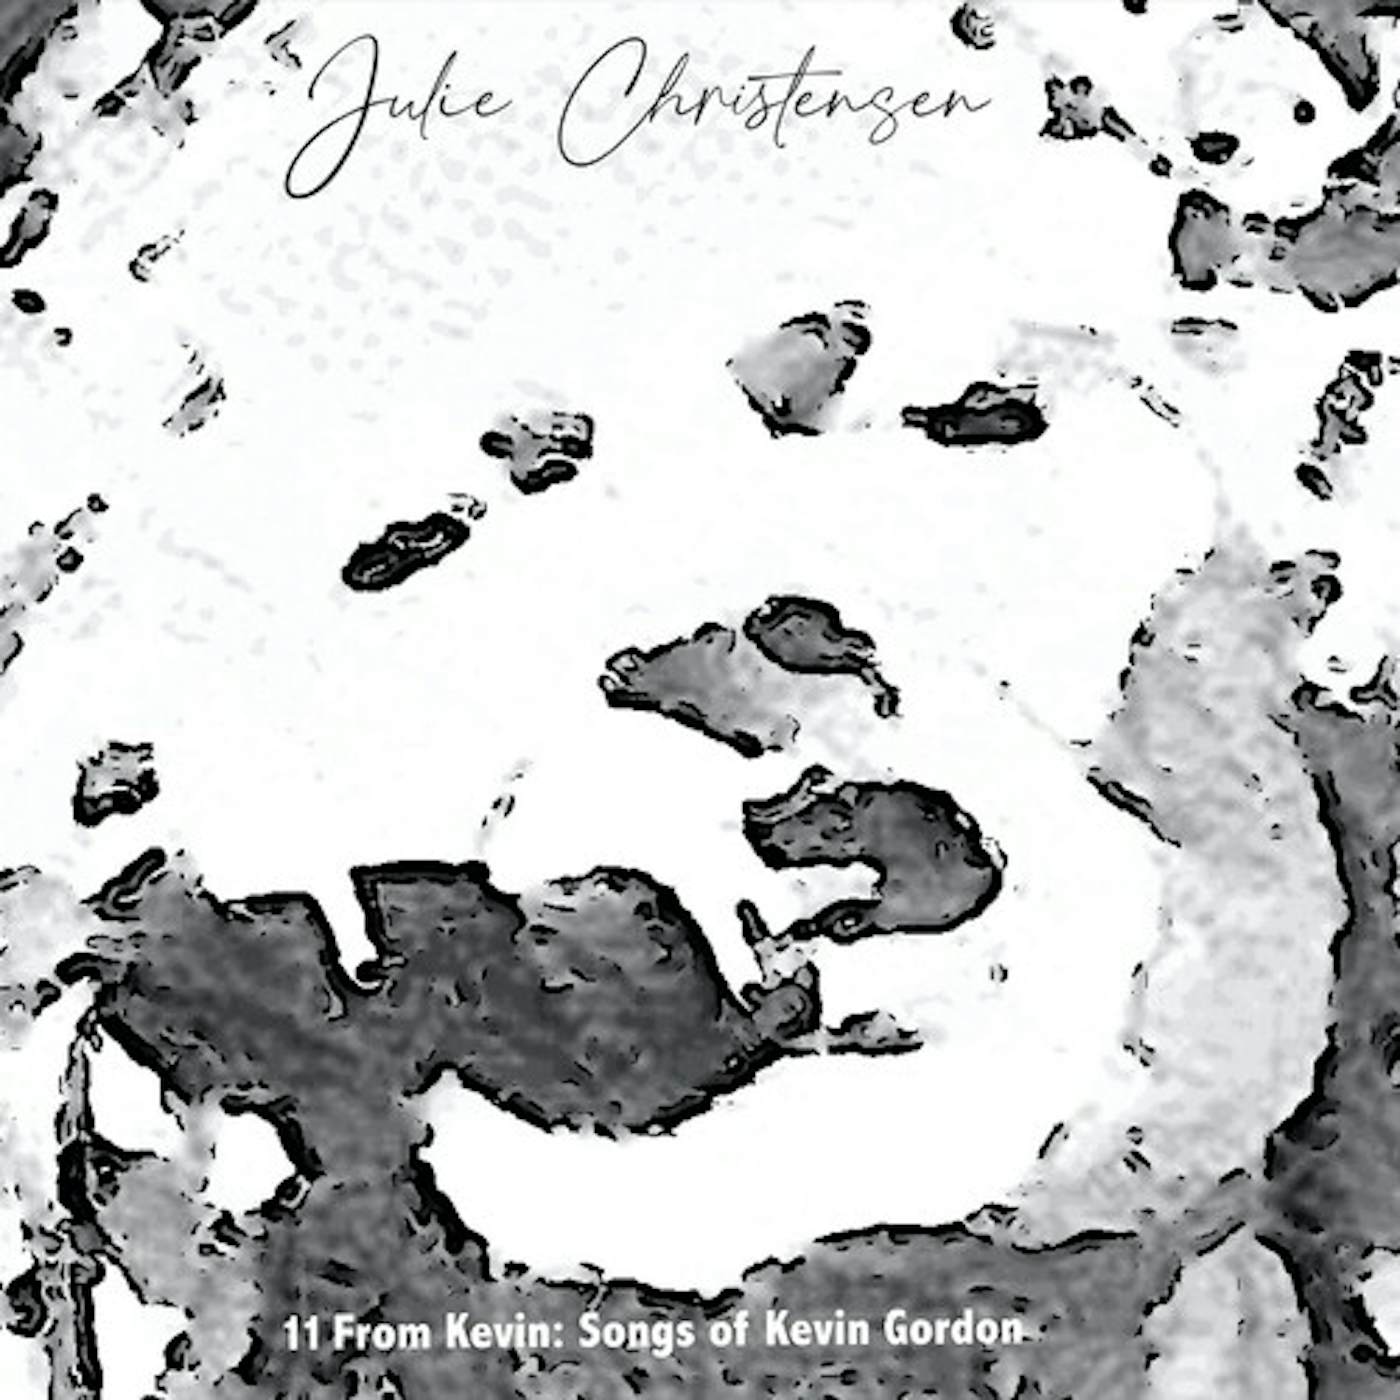 Julie Christensen 11 FROM KEVIN CD